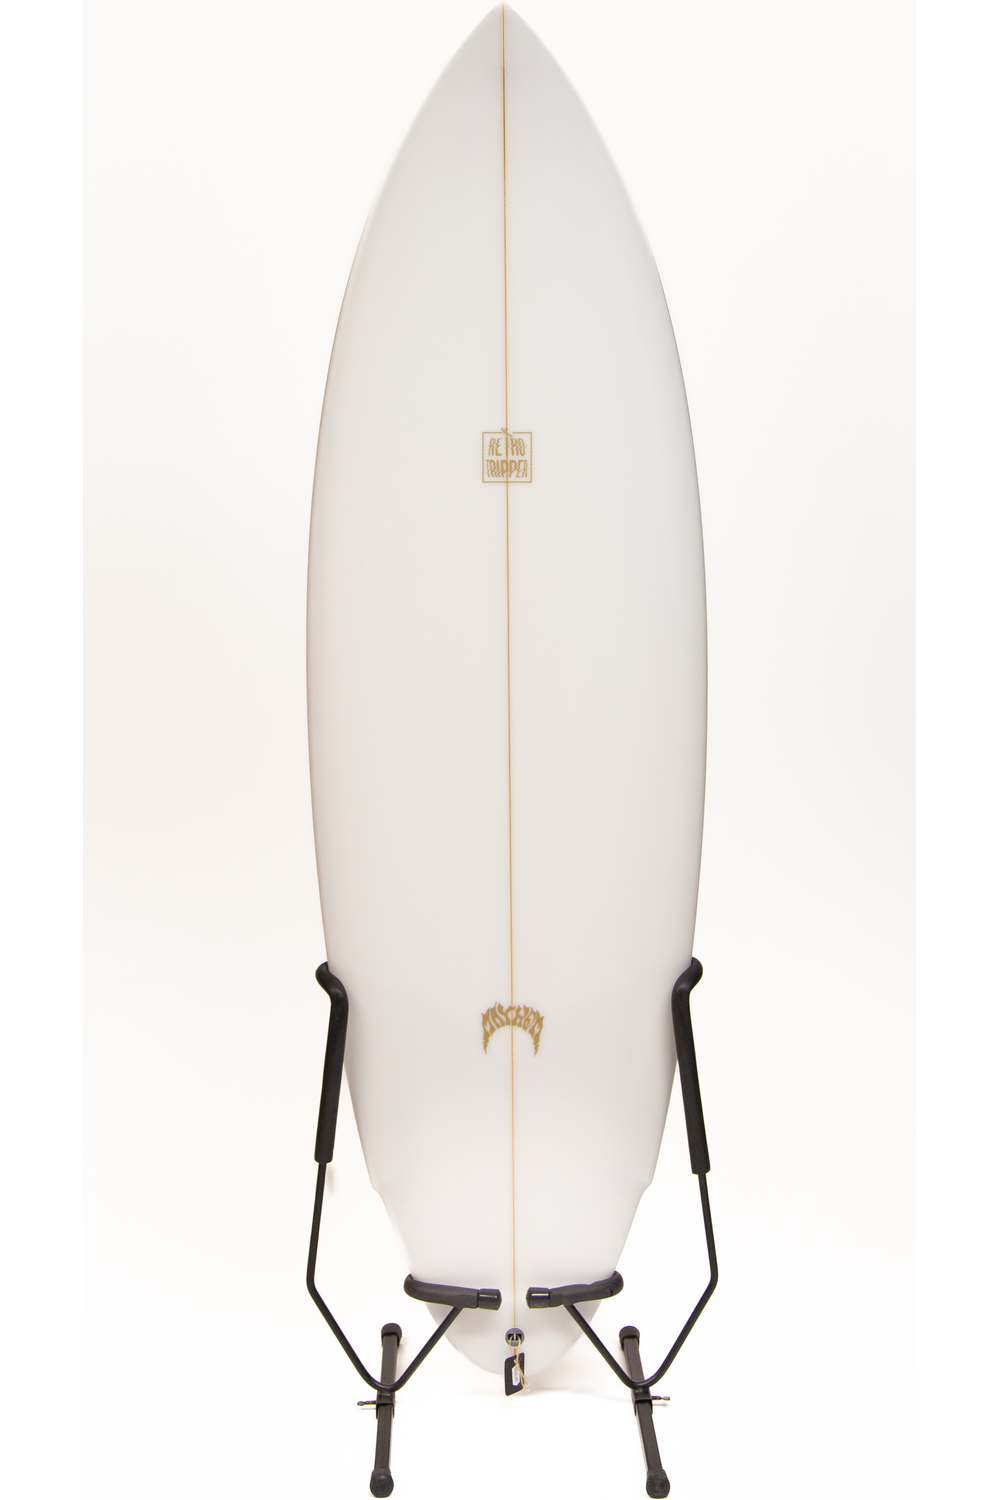 Lost Retro Tripper, 5'9 Surfboard 32.00L PU Futures 3 Fins